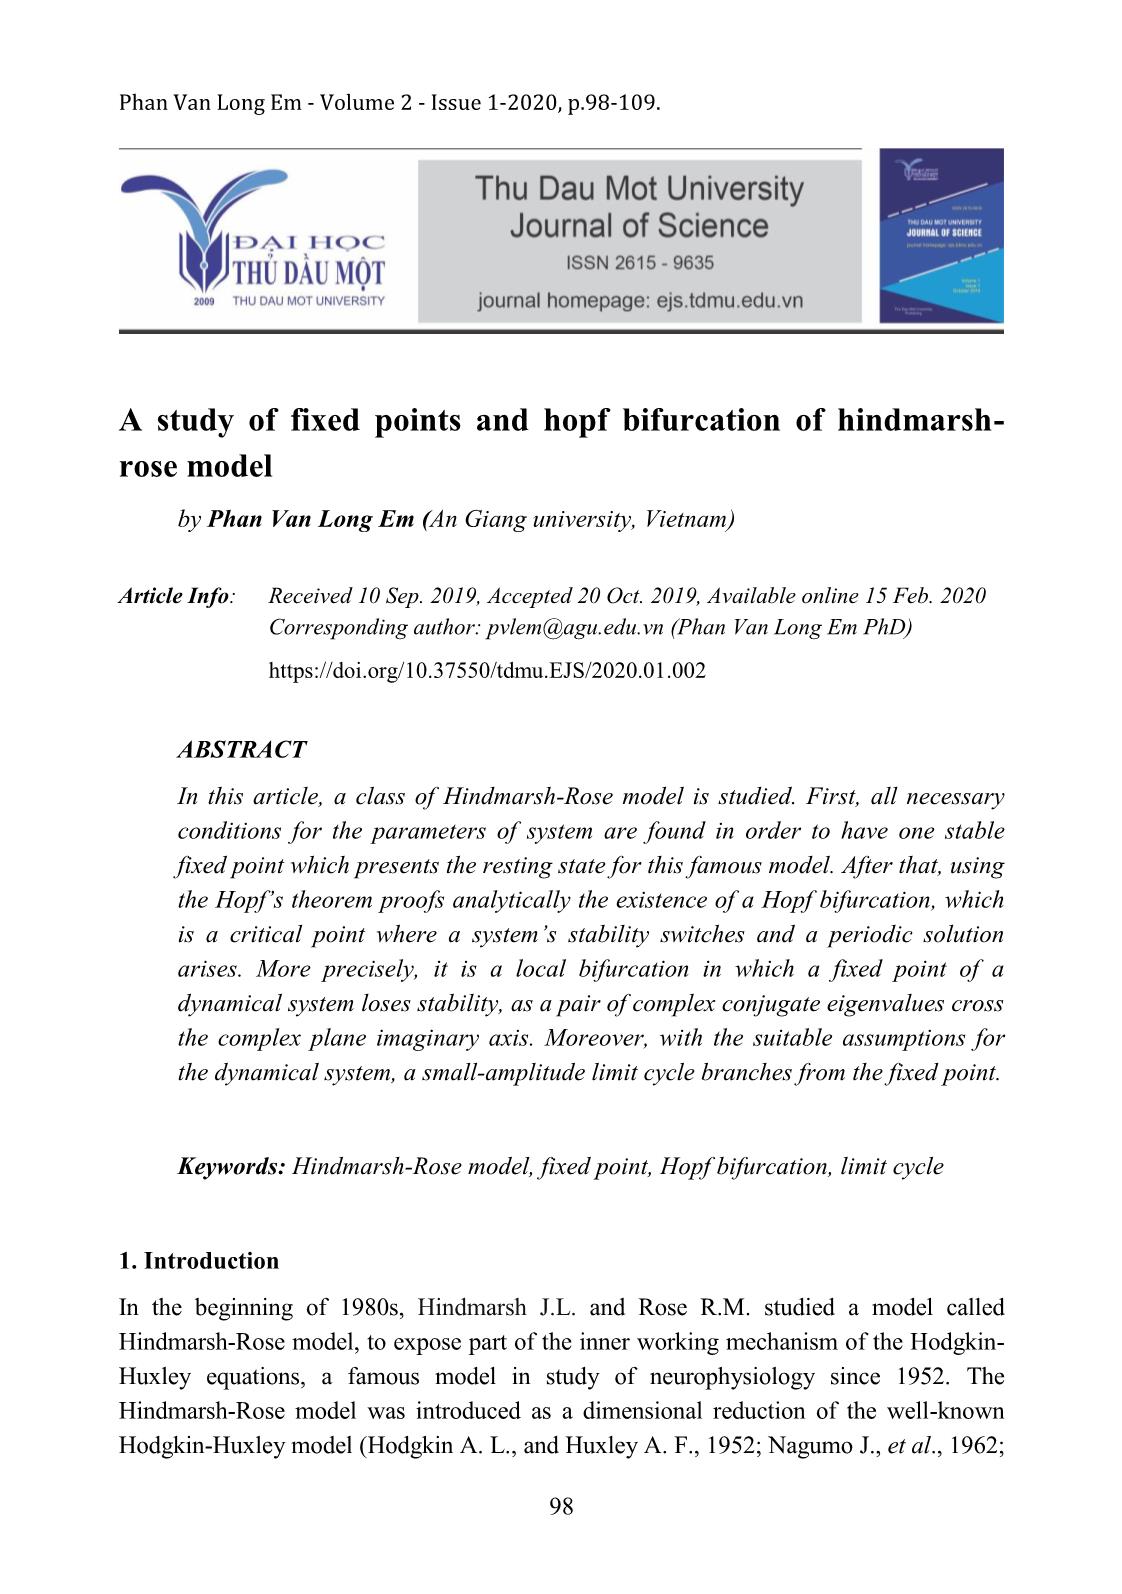 A study of fixed points and hopf bifurcation of hindmarshrose model trang 1